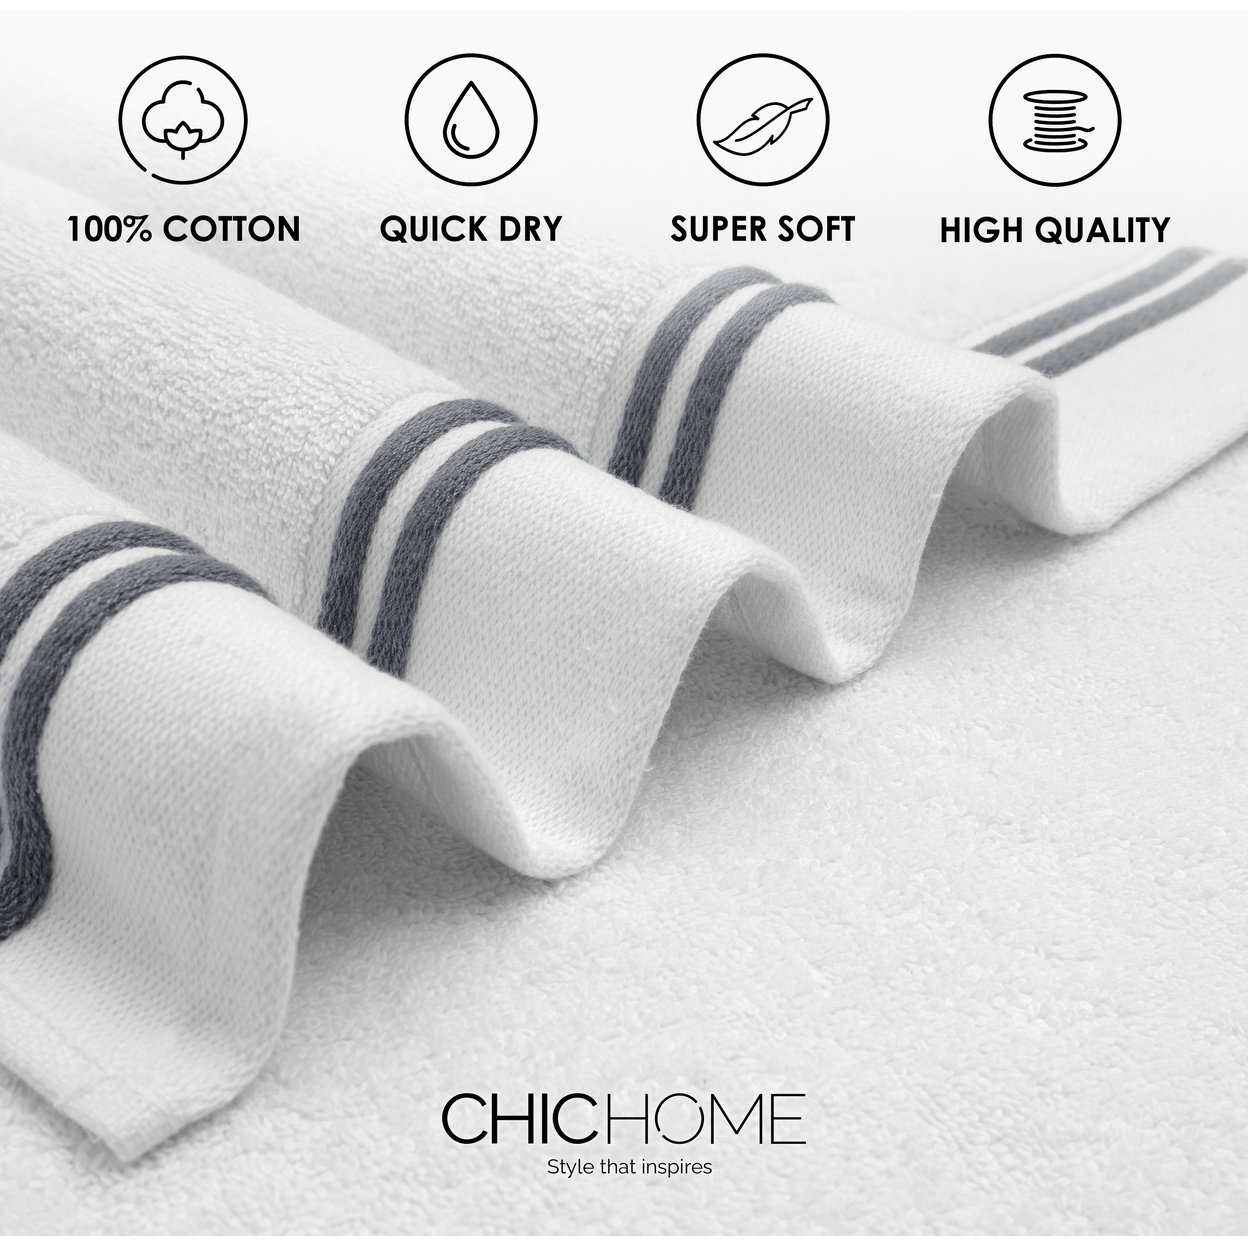 Chic Home Luxurious 2-Piece 100% Pure Turkish Cotton White Bath Sheet Towels, 34x68, Striped Hem, OEKO-TEX Certified Set - White-grey